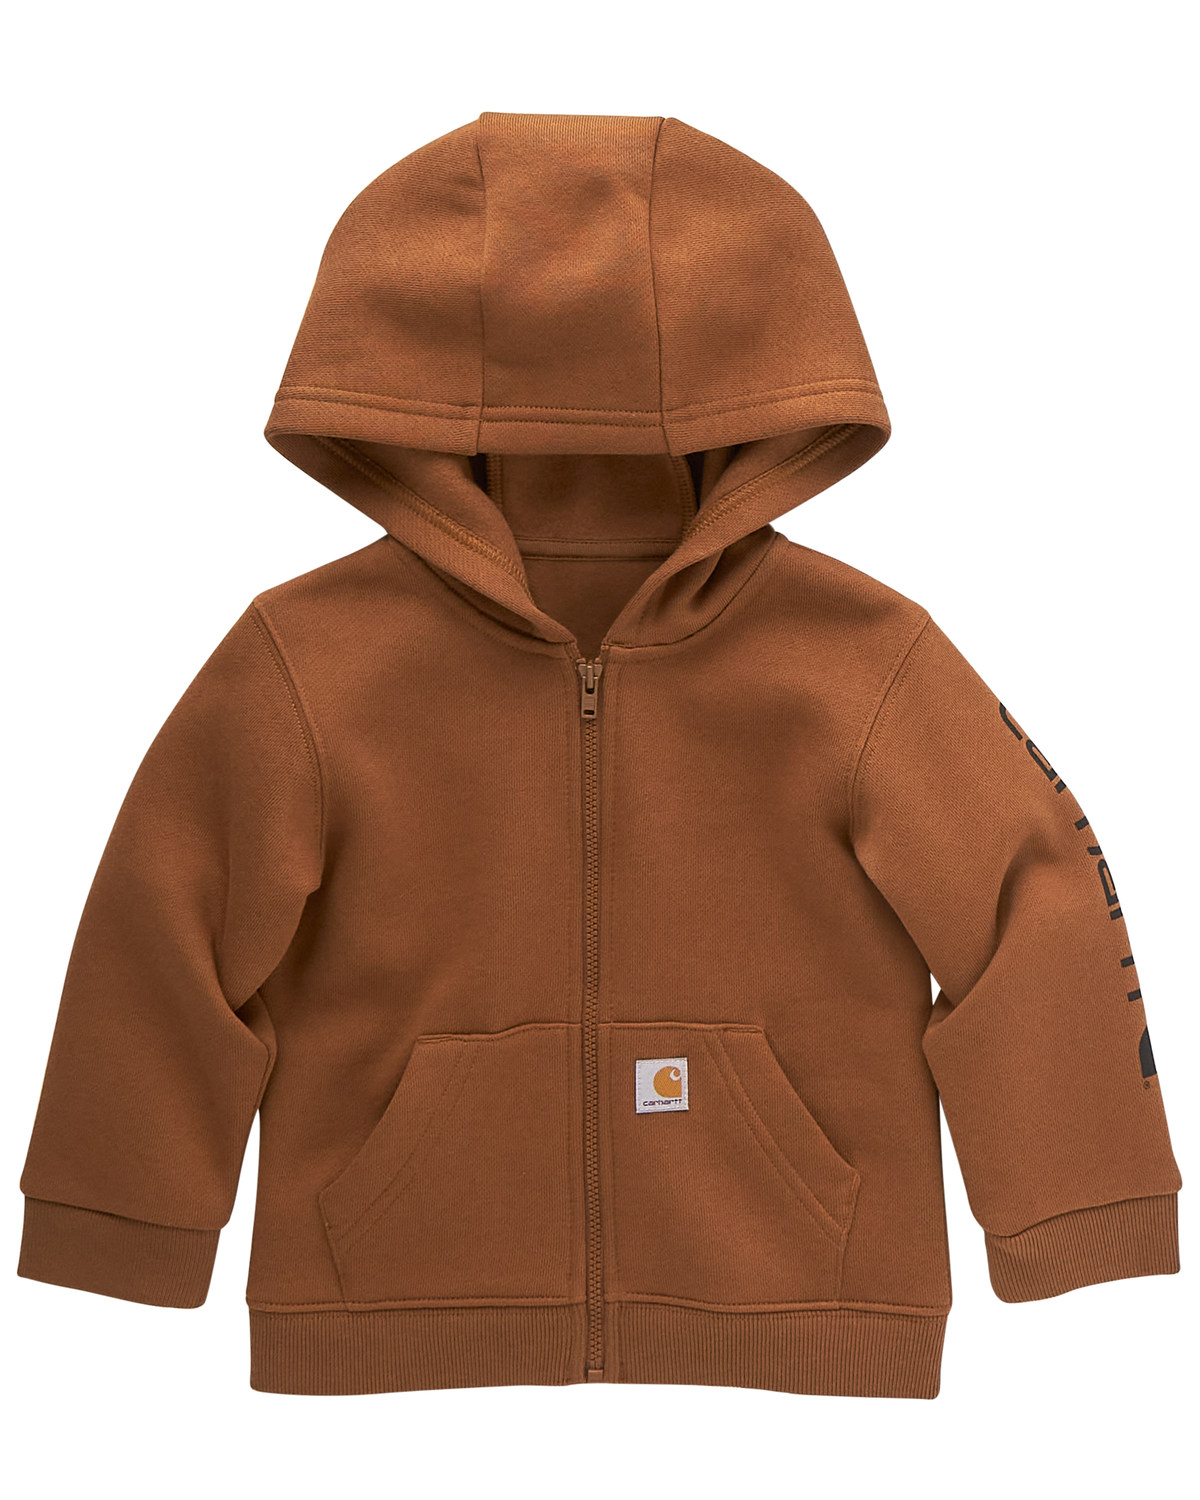 Carhartt Toddler Boys' Logo Zip Hooded Jacket